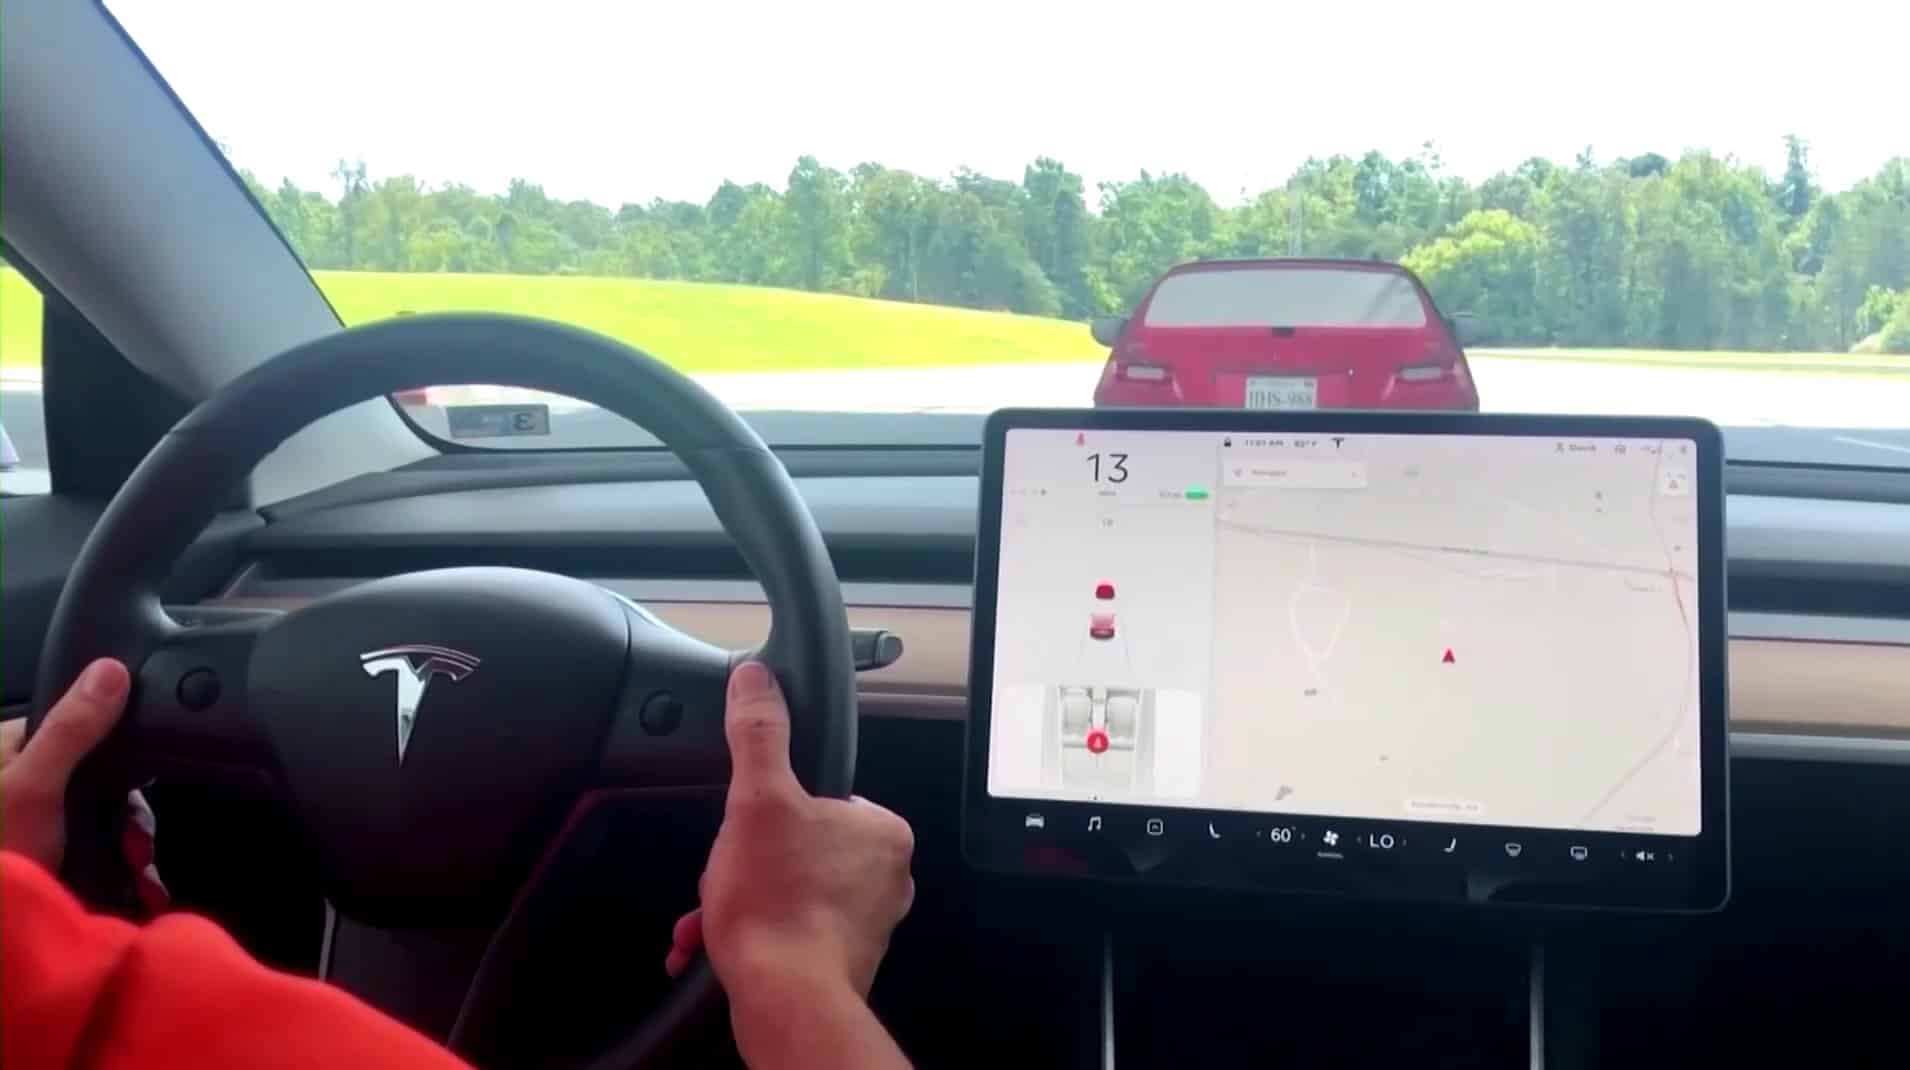 Updated Tesla Model 3 imminent, as orders open overseas – report - Drive